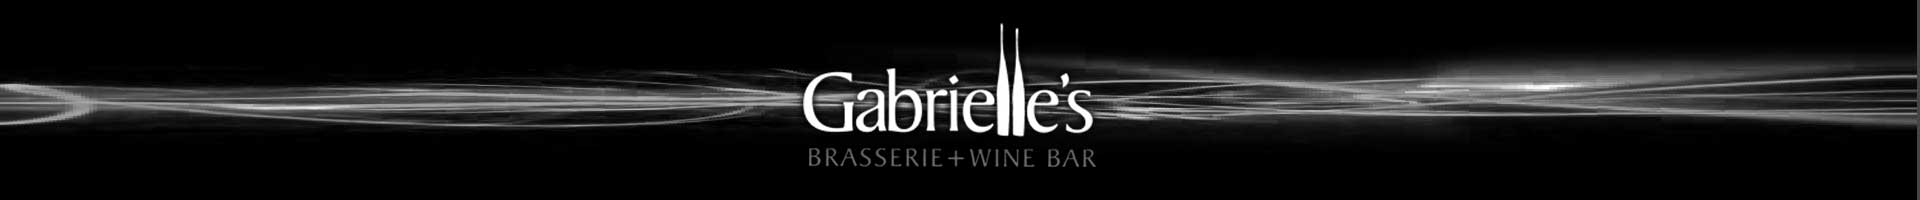 Gabrielle's Brasserie and Wine Bar